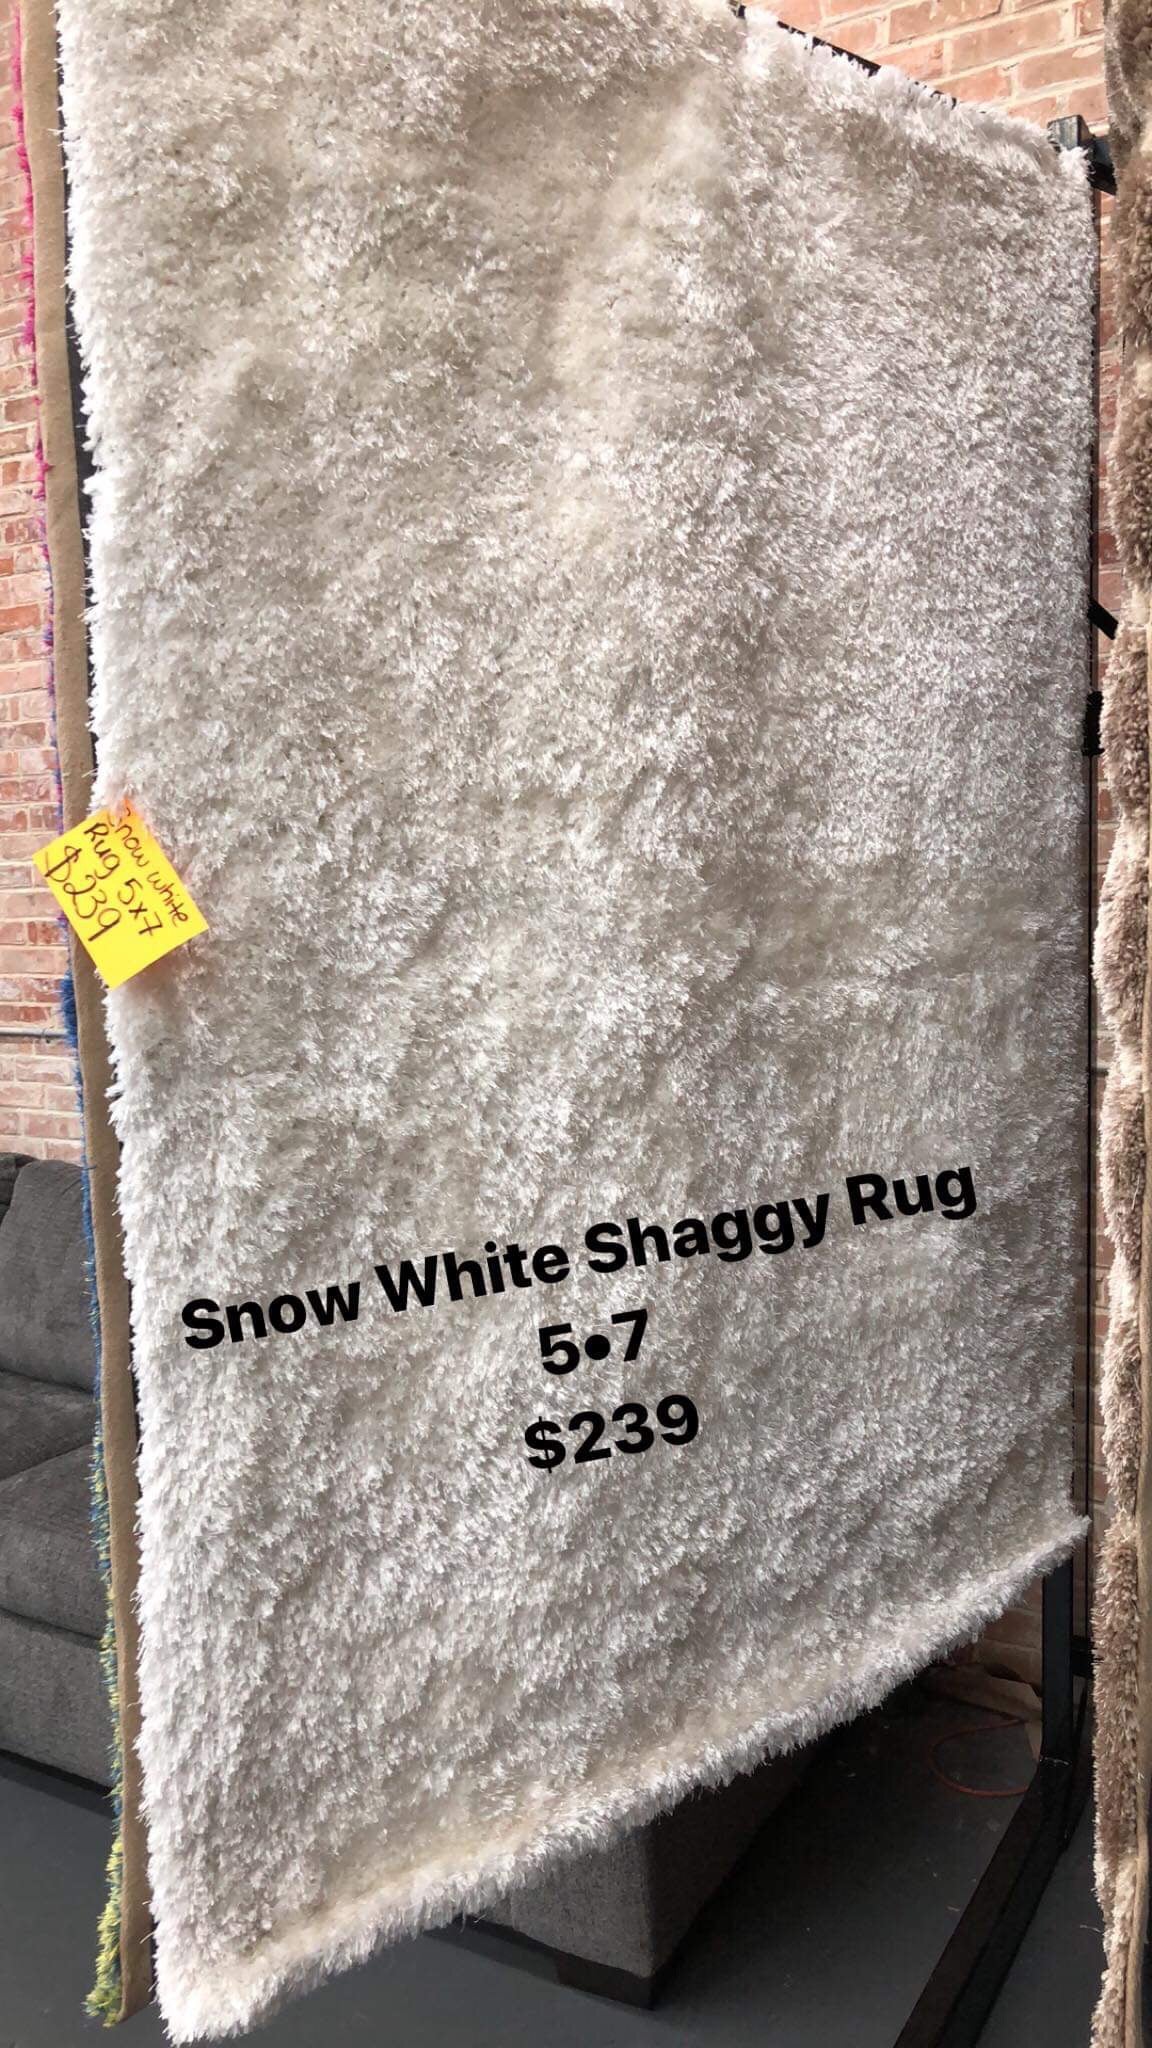 5x7 Snow White Shaggy Rug